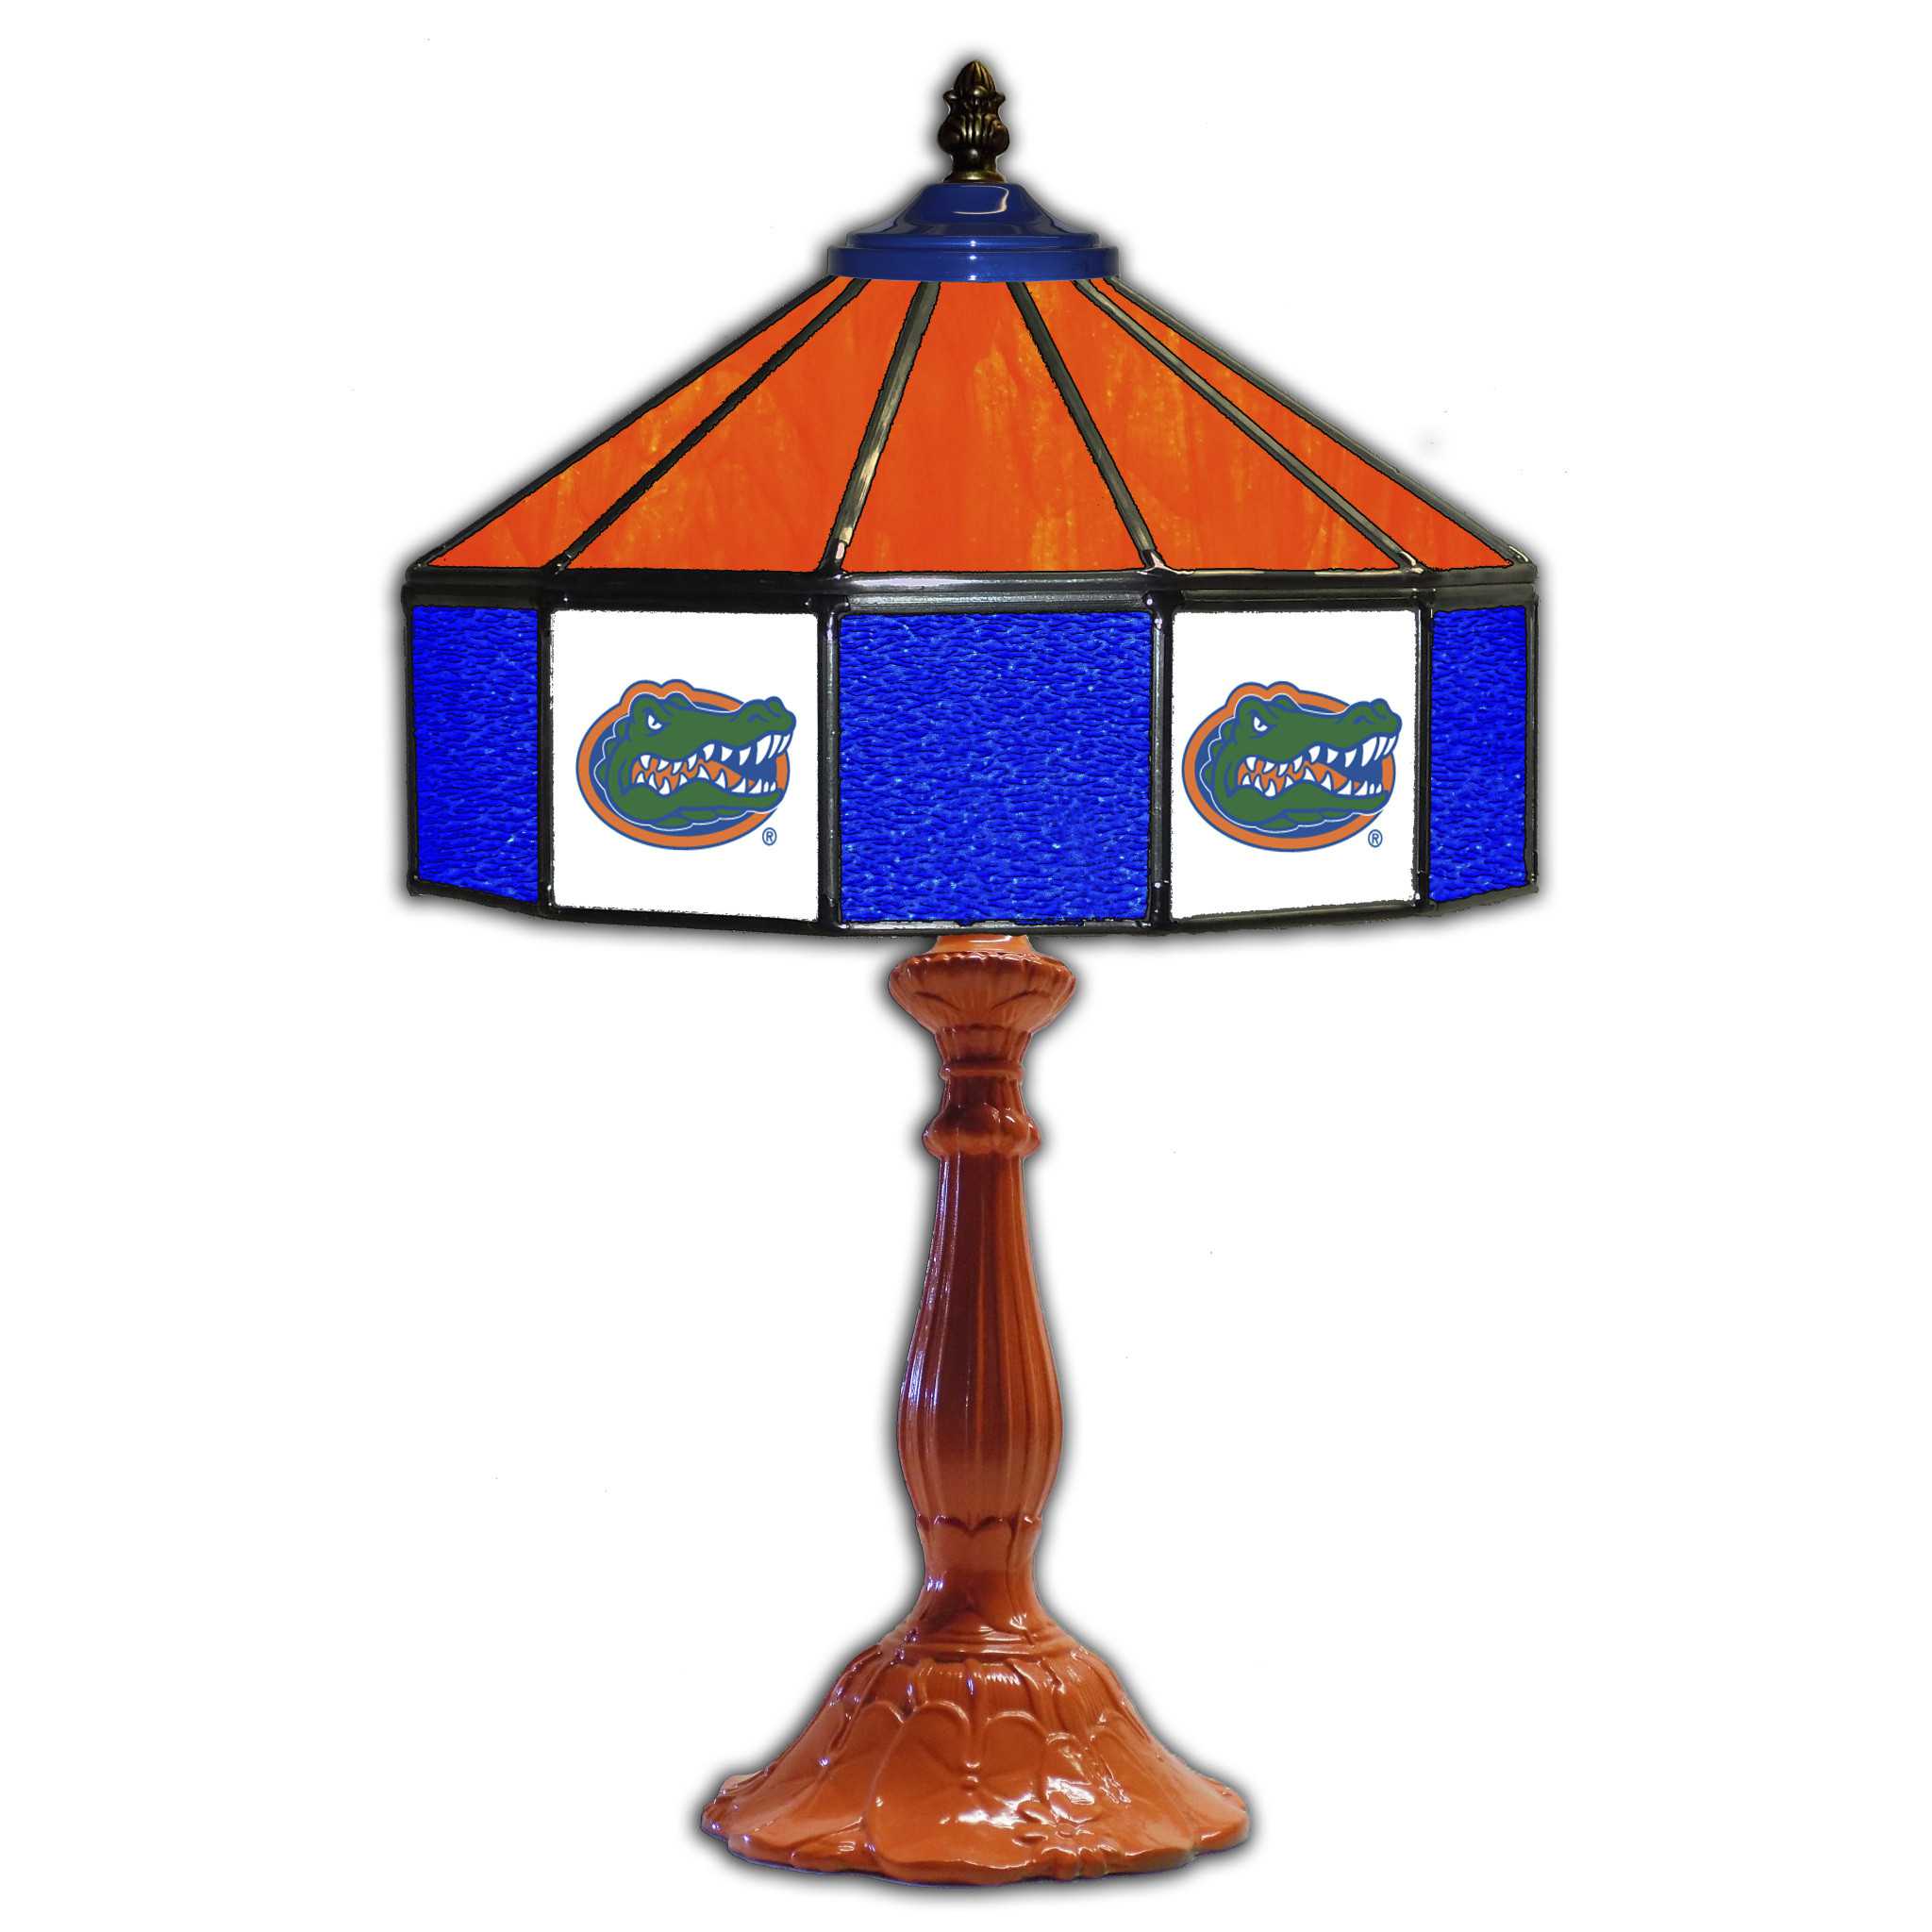 UNIVERSITY OF FLORIDA 21" GLASS TABLE LAMP